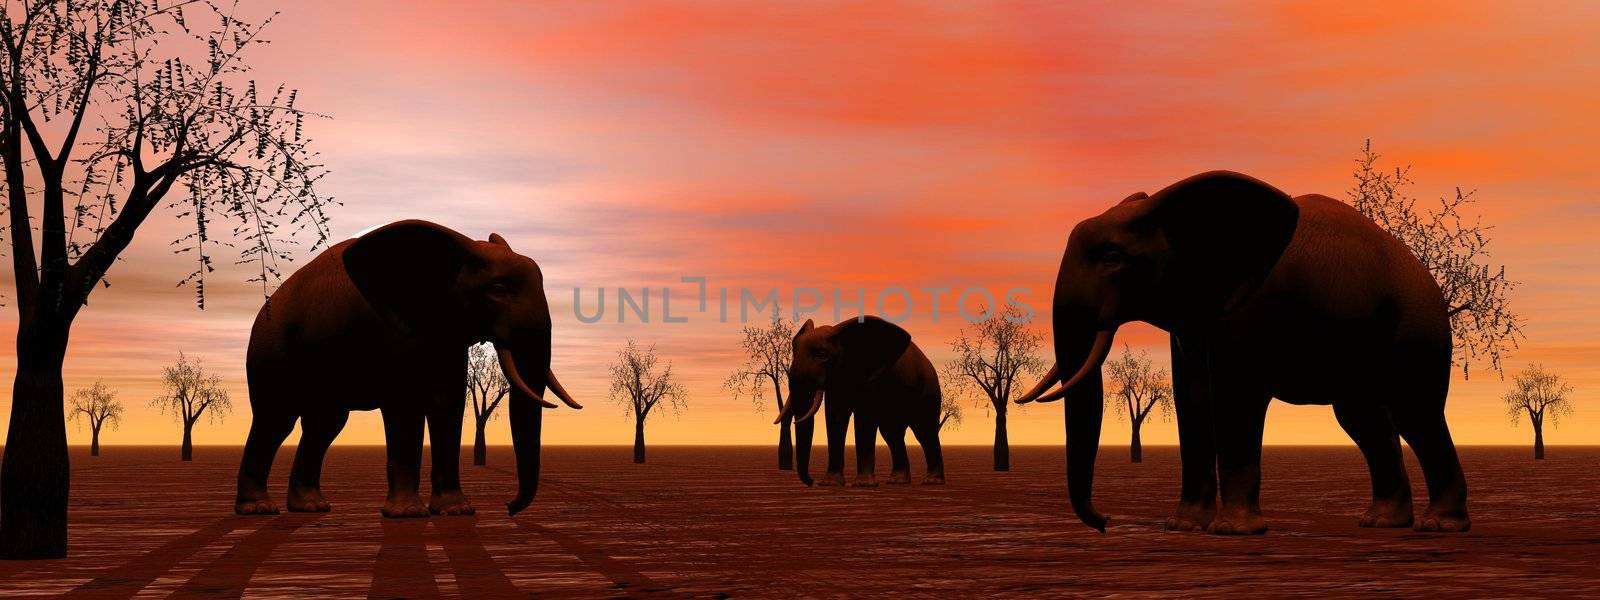 Shadows of three elephants standing between baobabs in the savannah by sunset